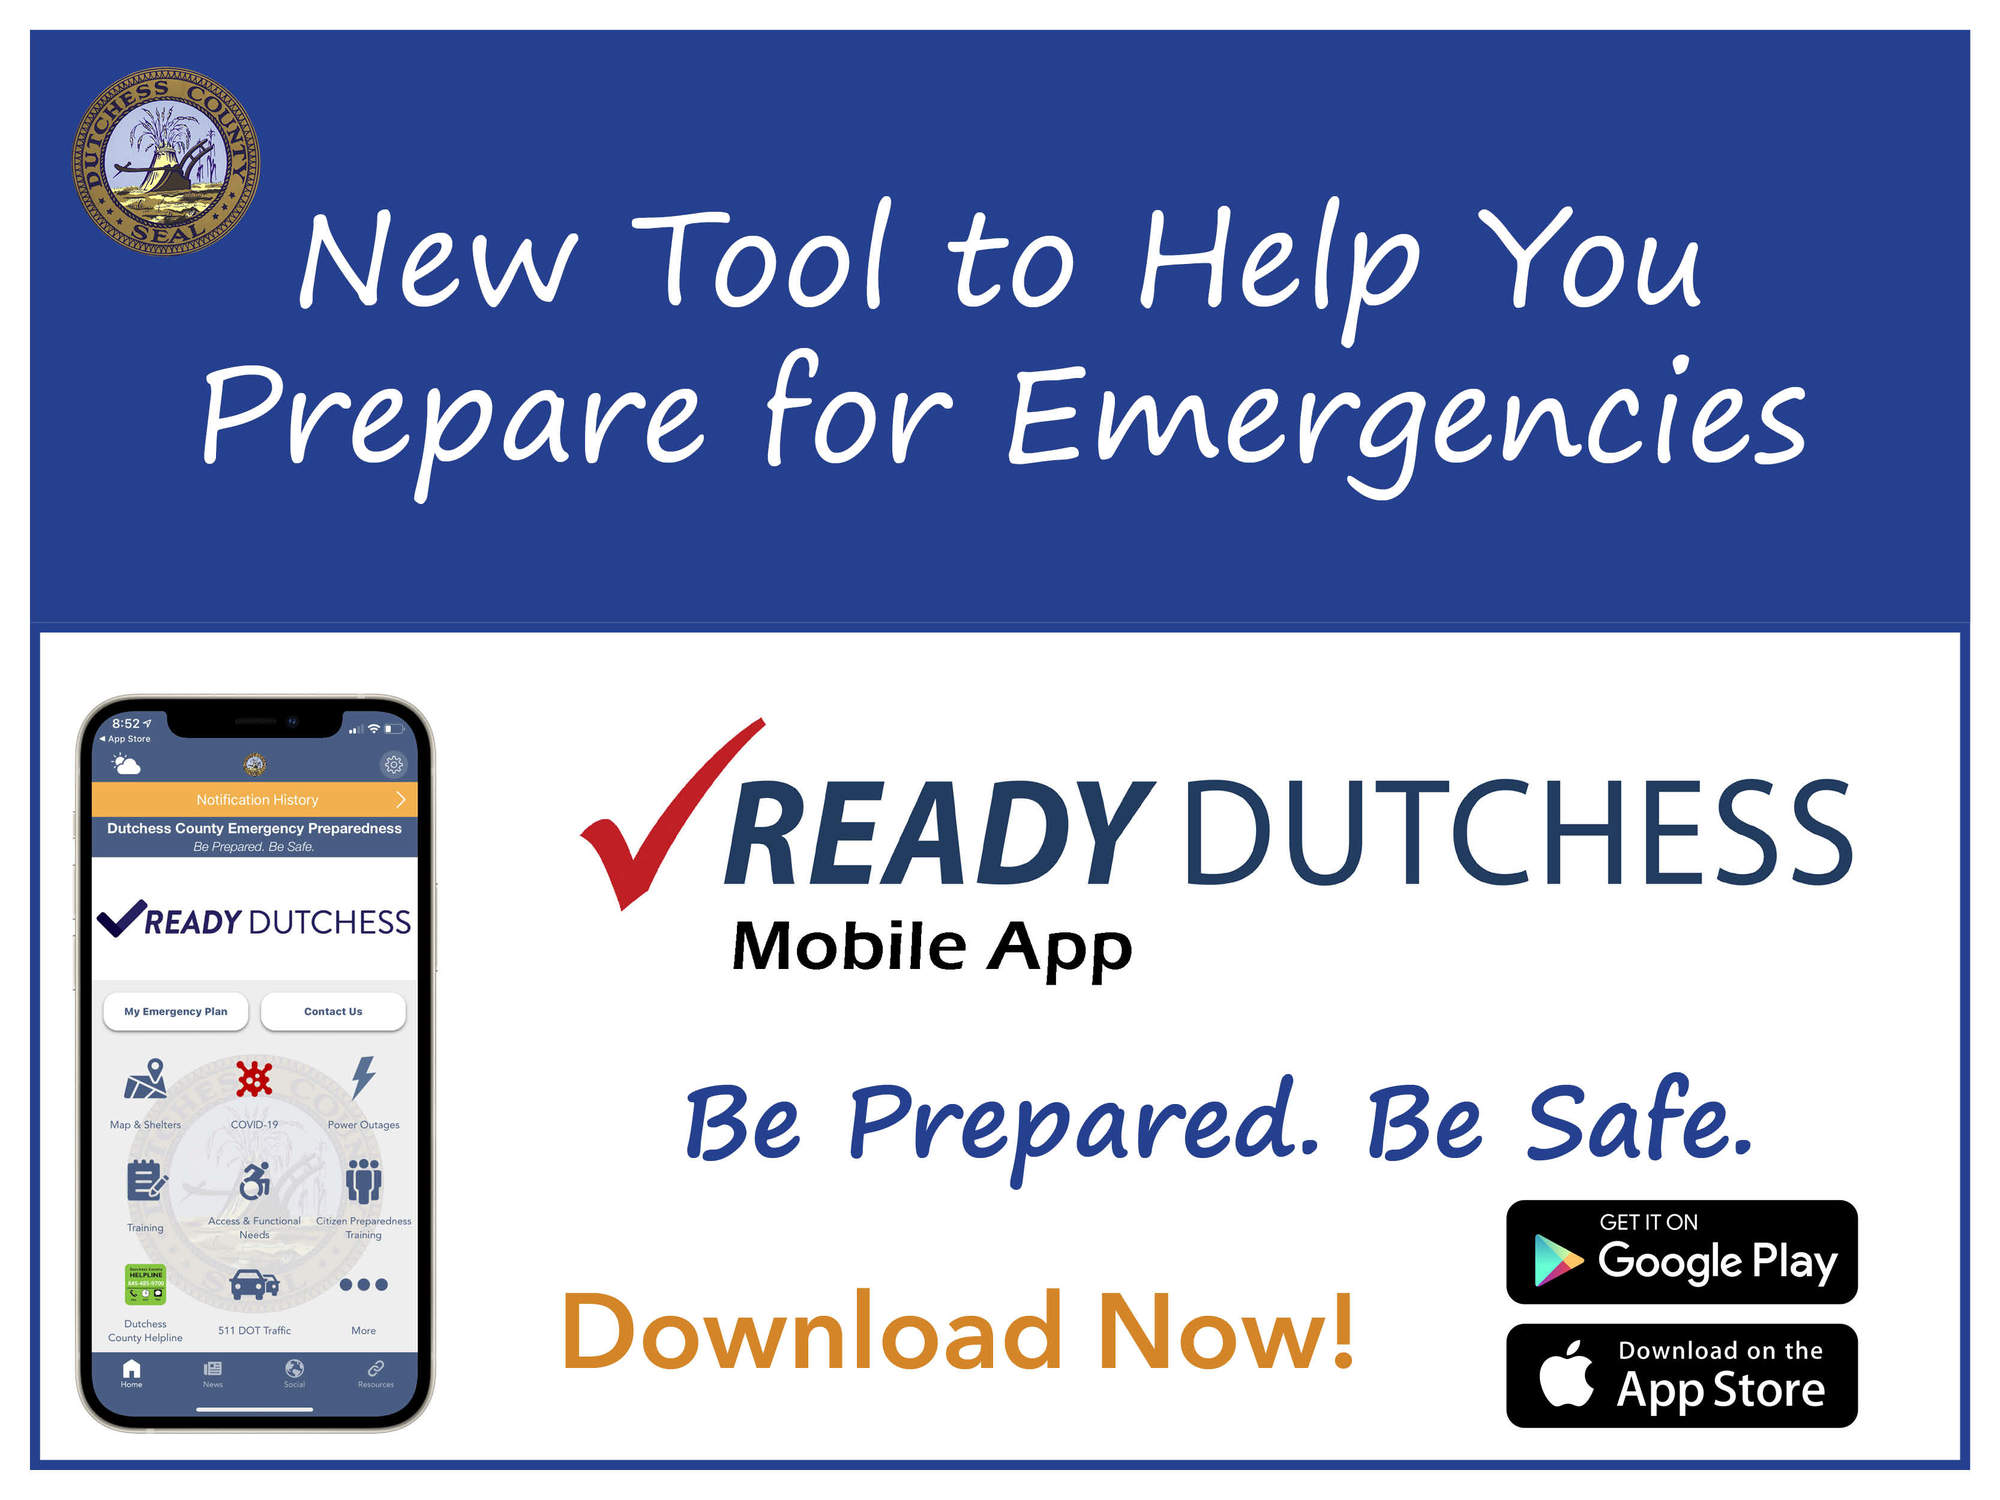 Ready Dutchess Mobile App